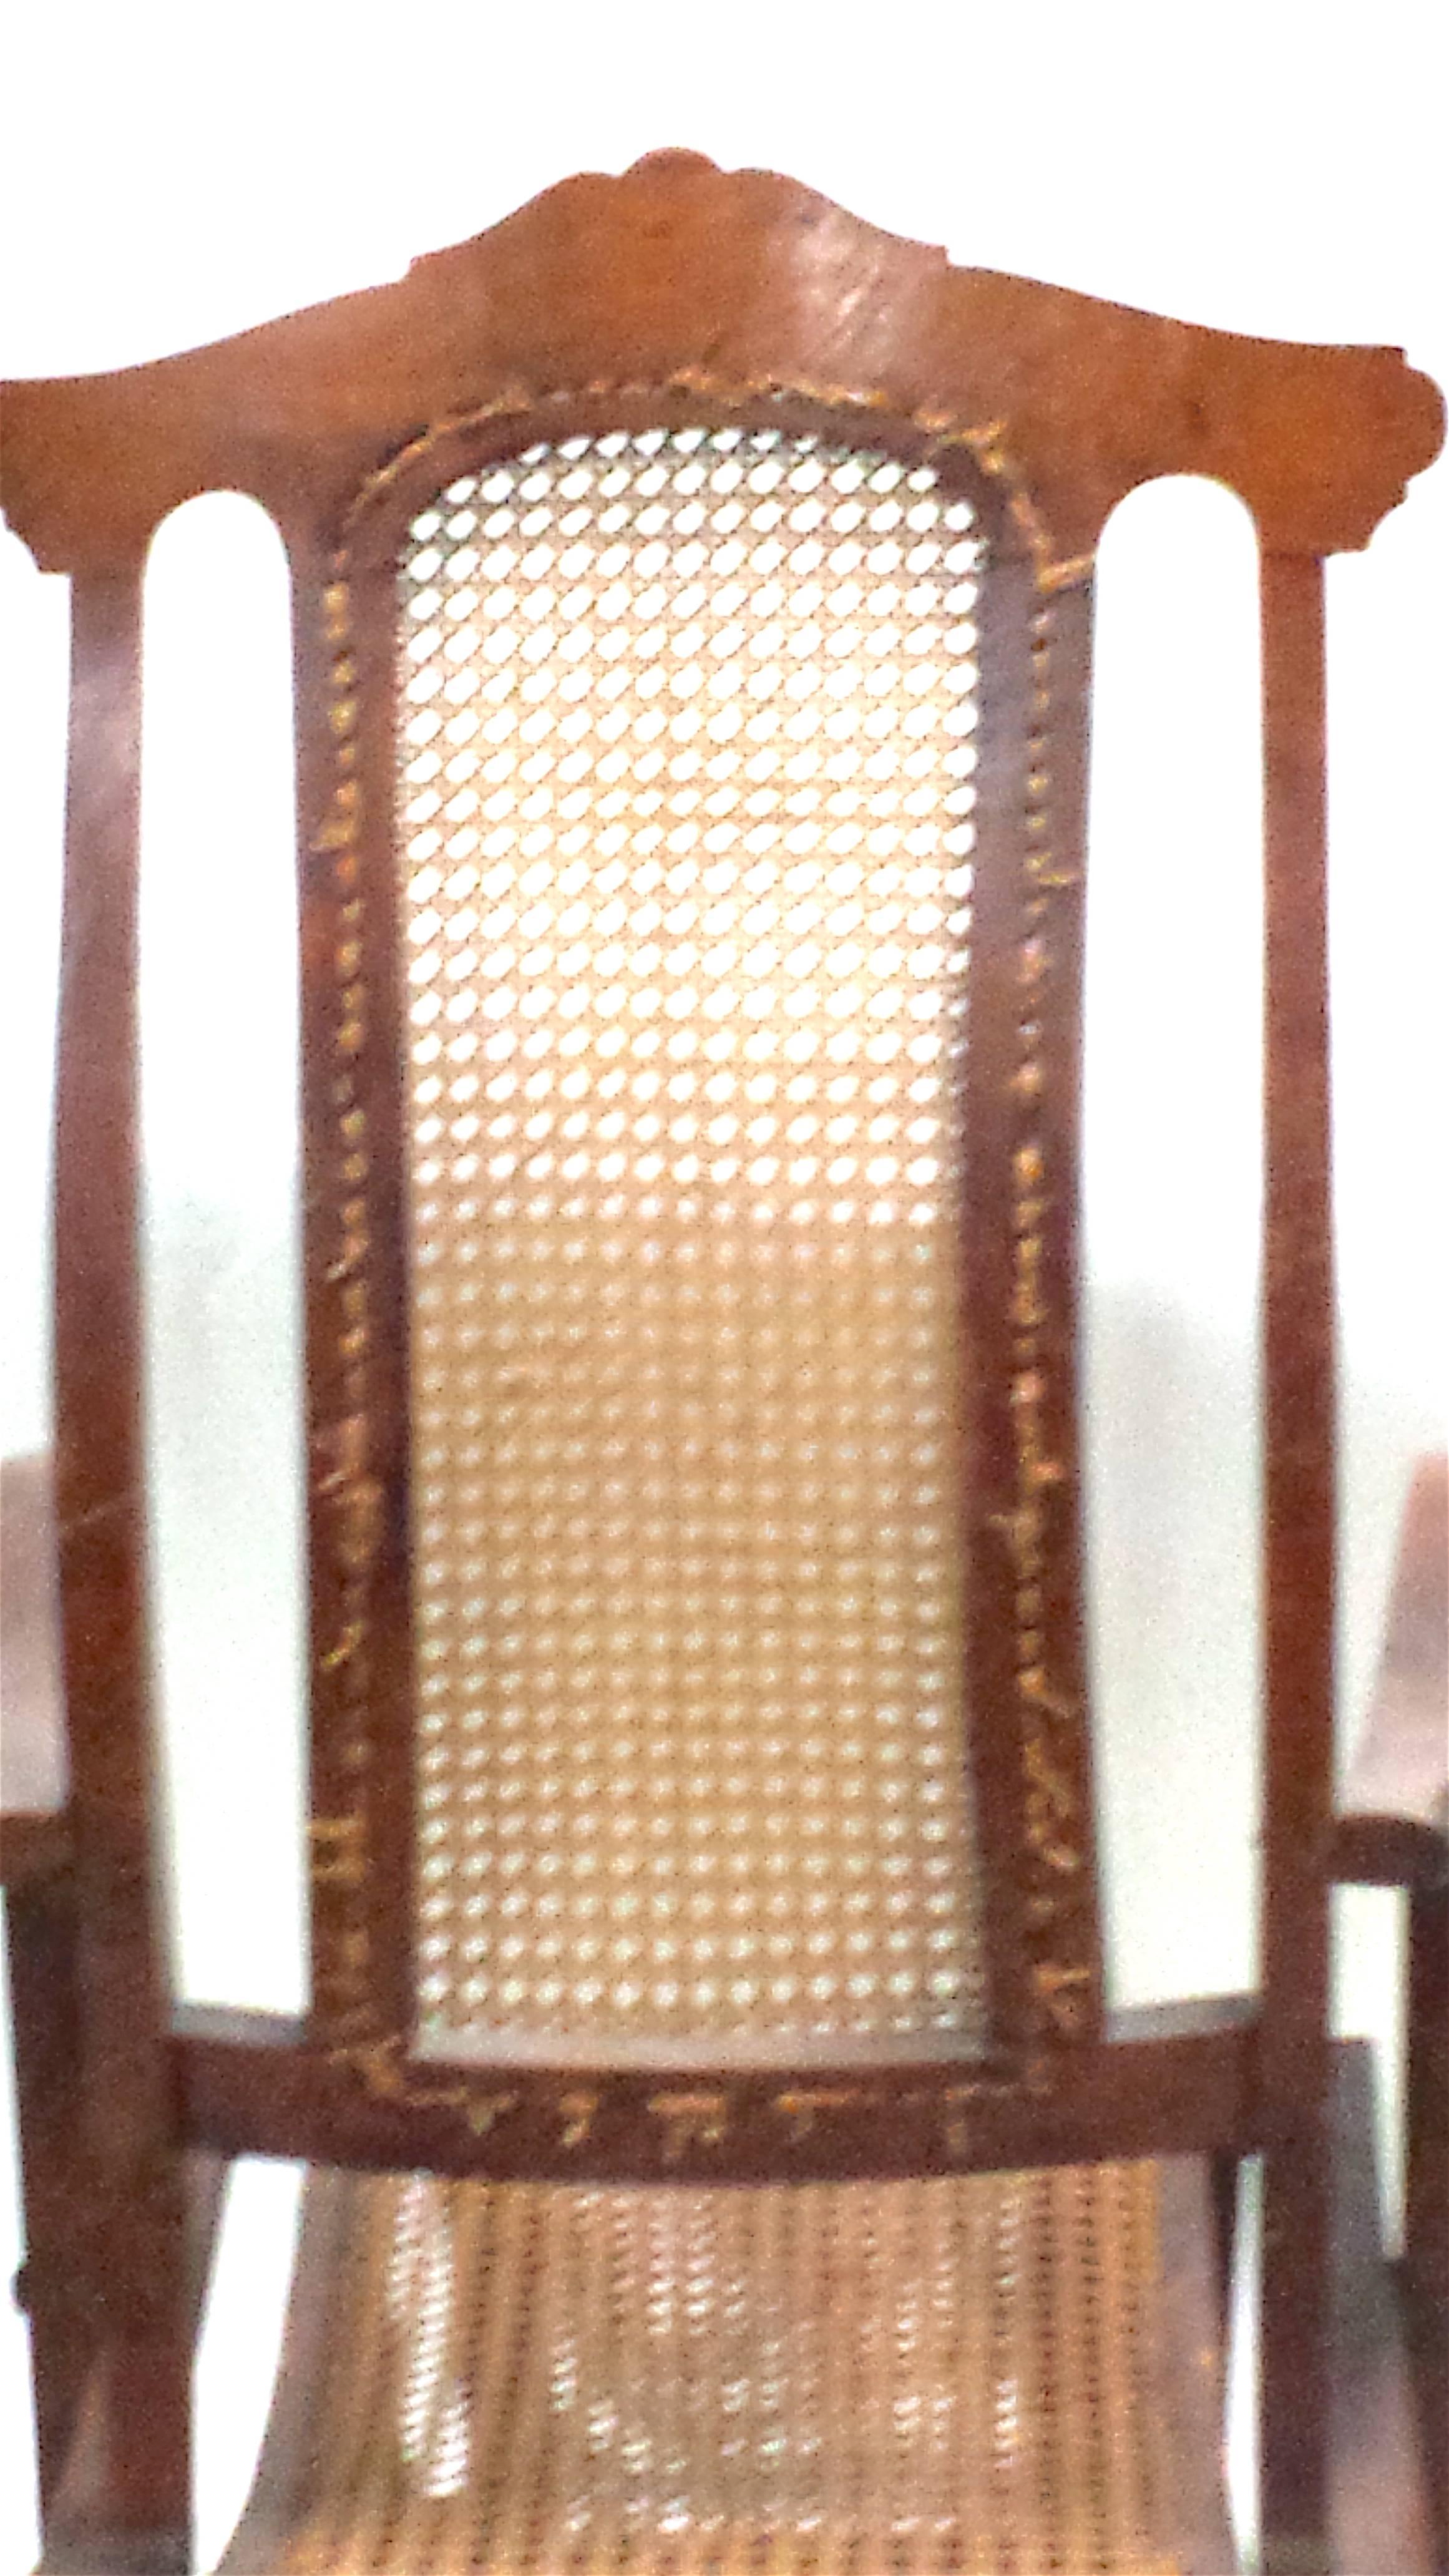 antique steamer chair